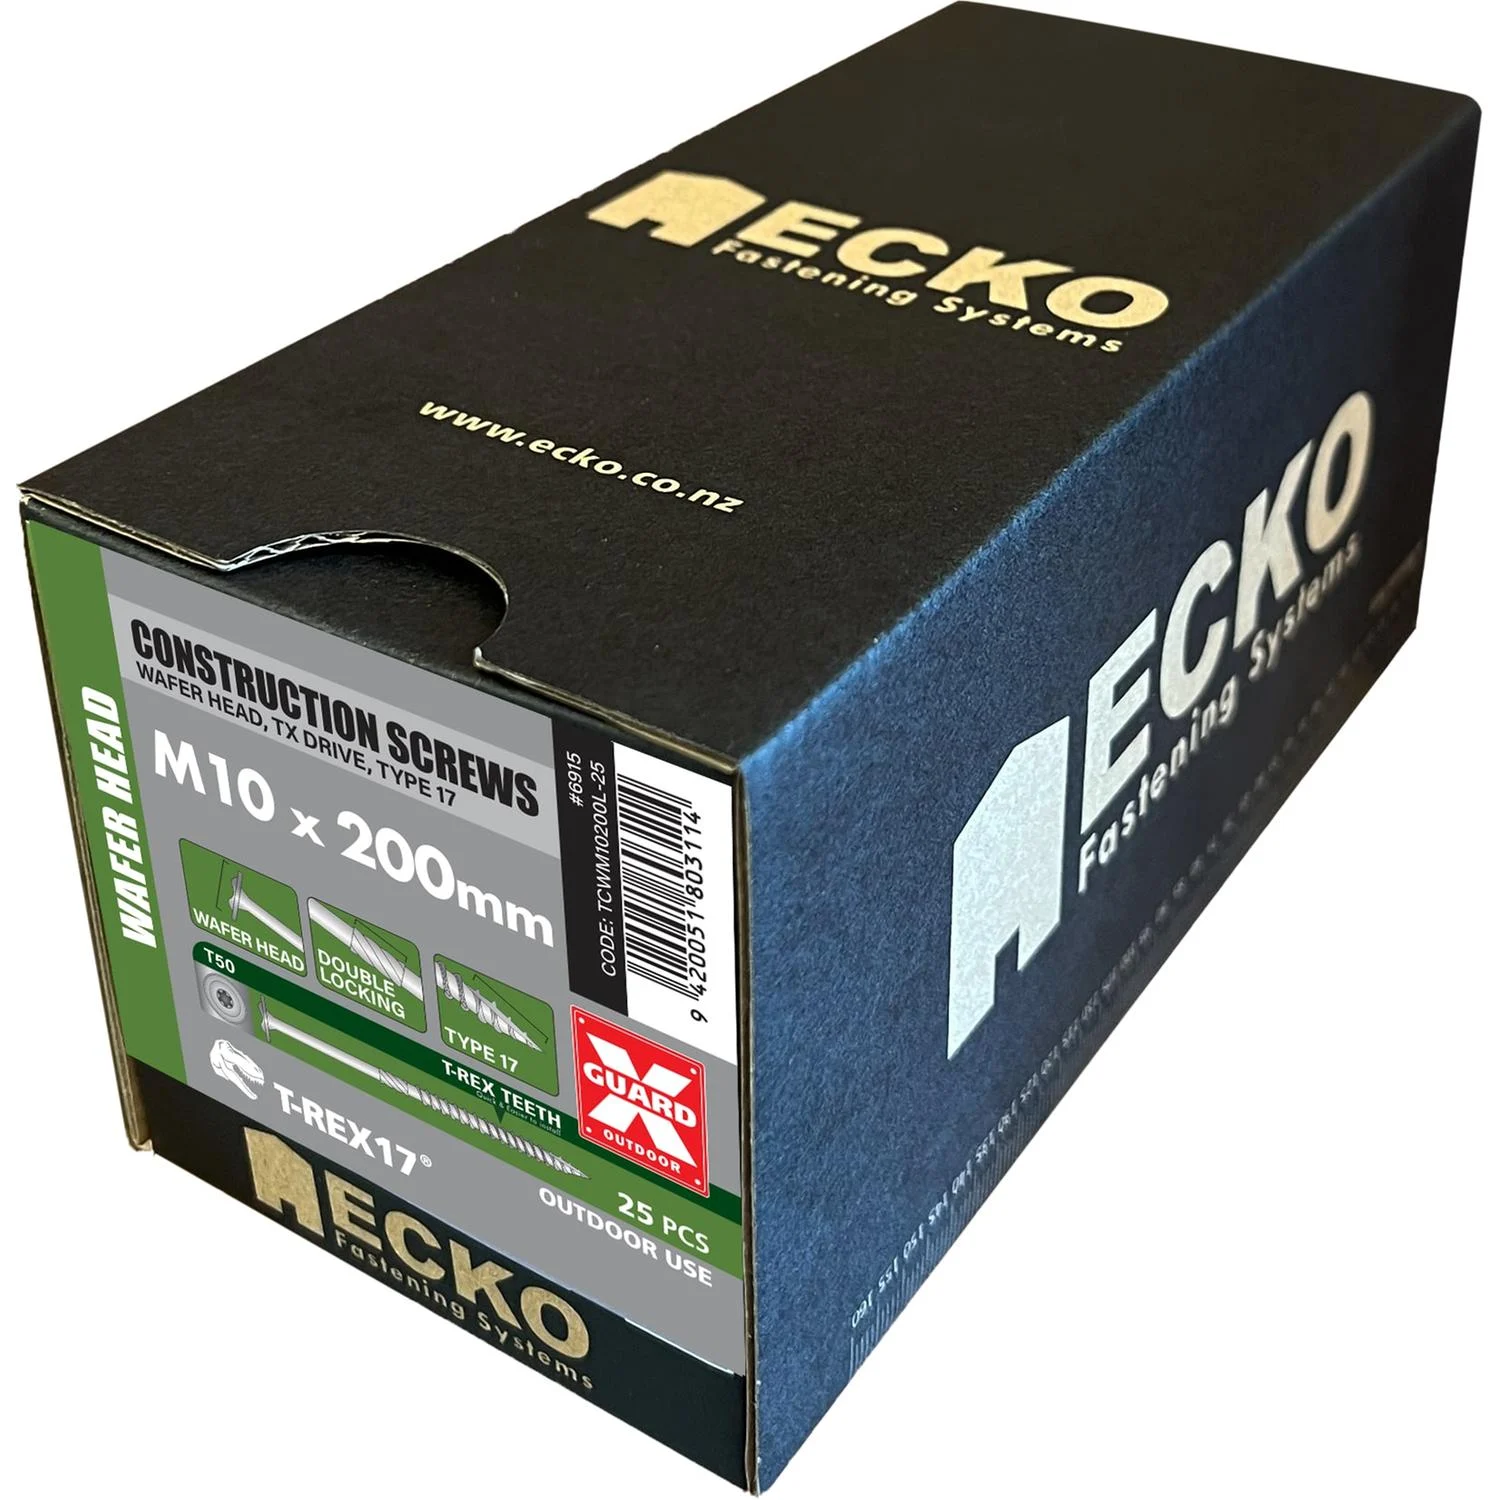 Ecko T-Rex17 Construction Screws M8 X 200Mm (300 Pack)